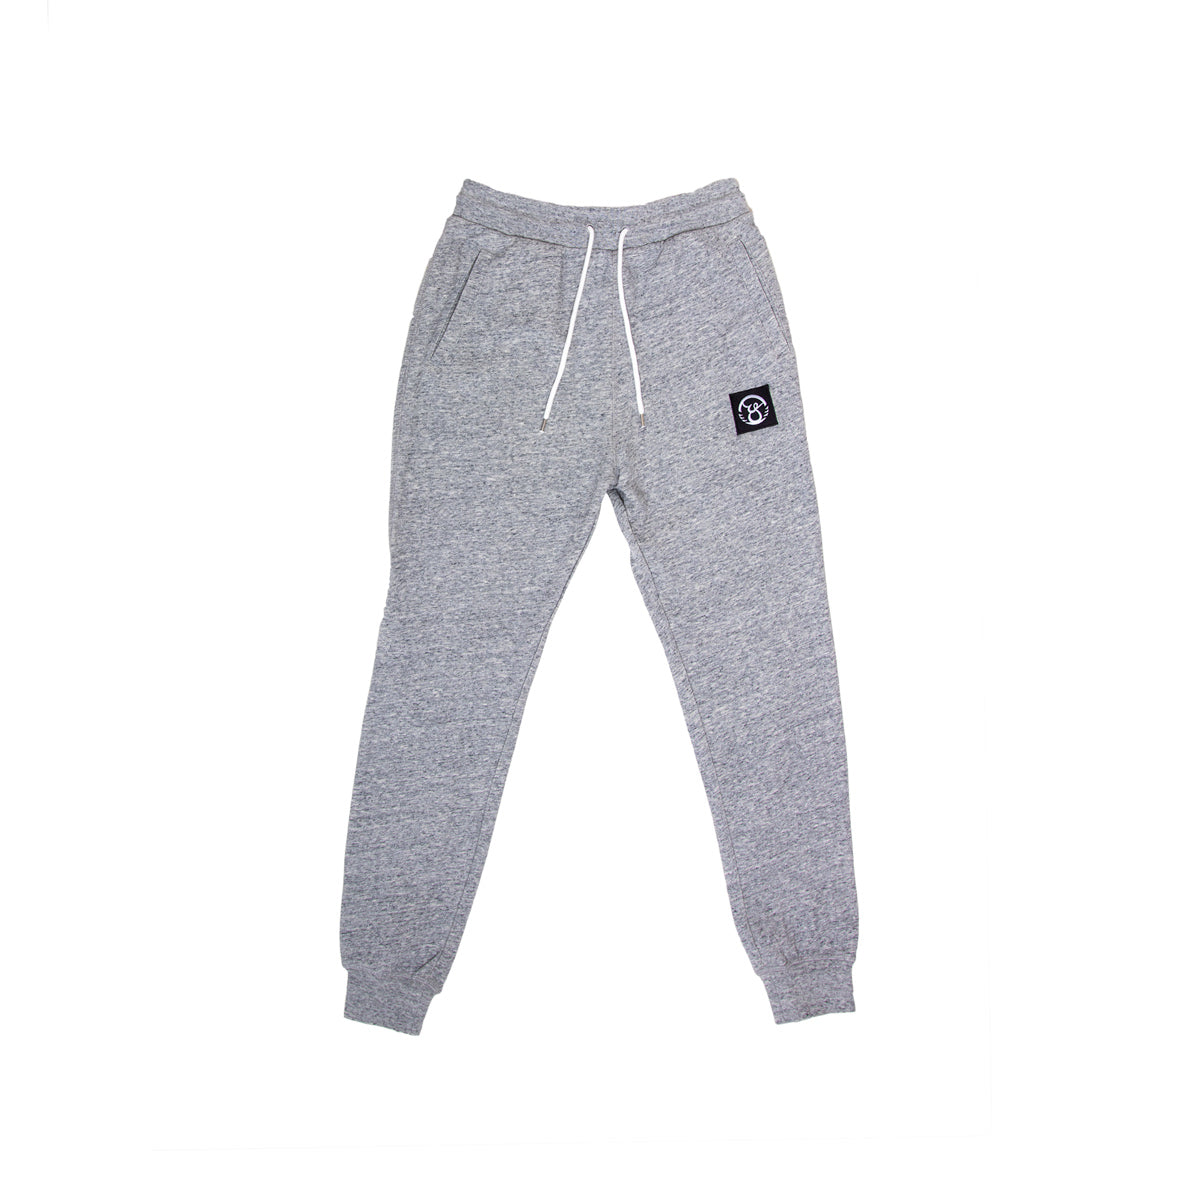 Grey Jogger Pants - OY BRAND CLOTHING